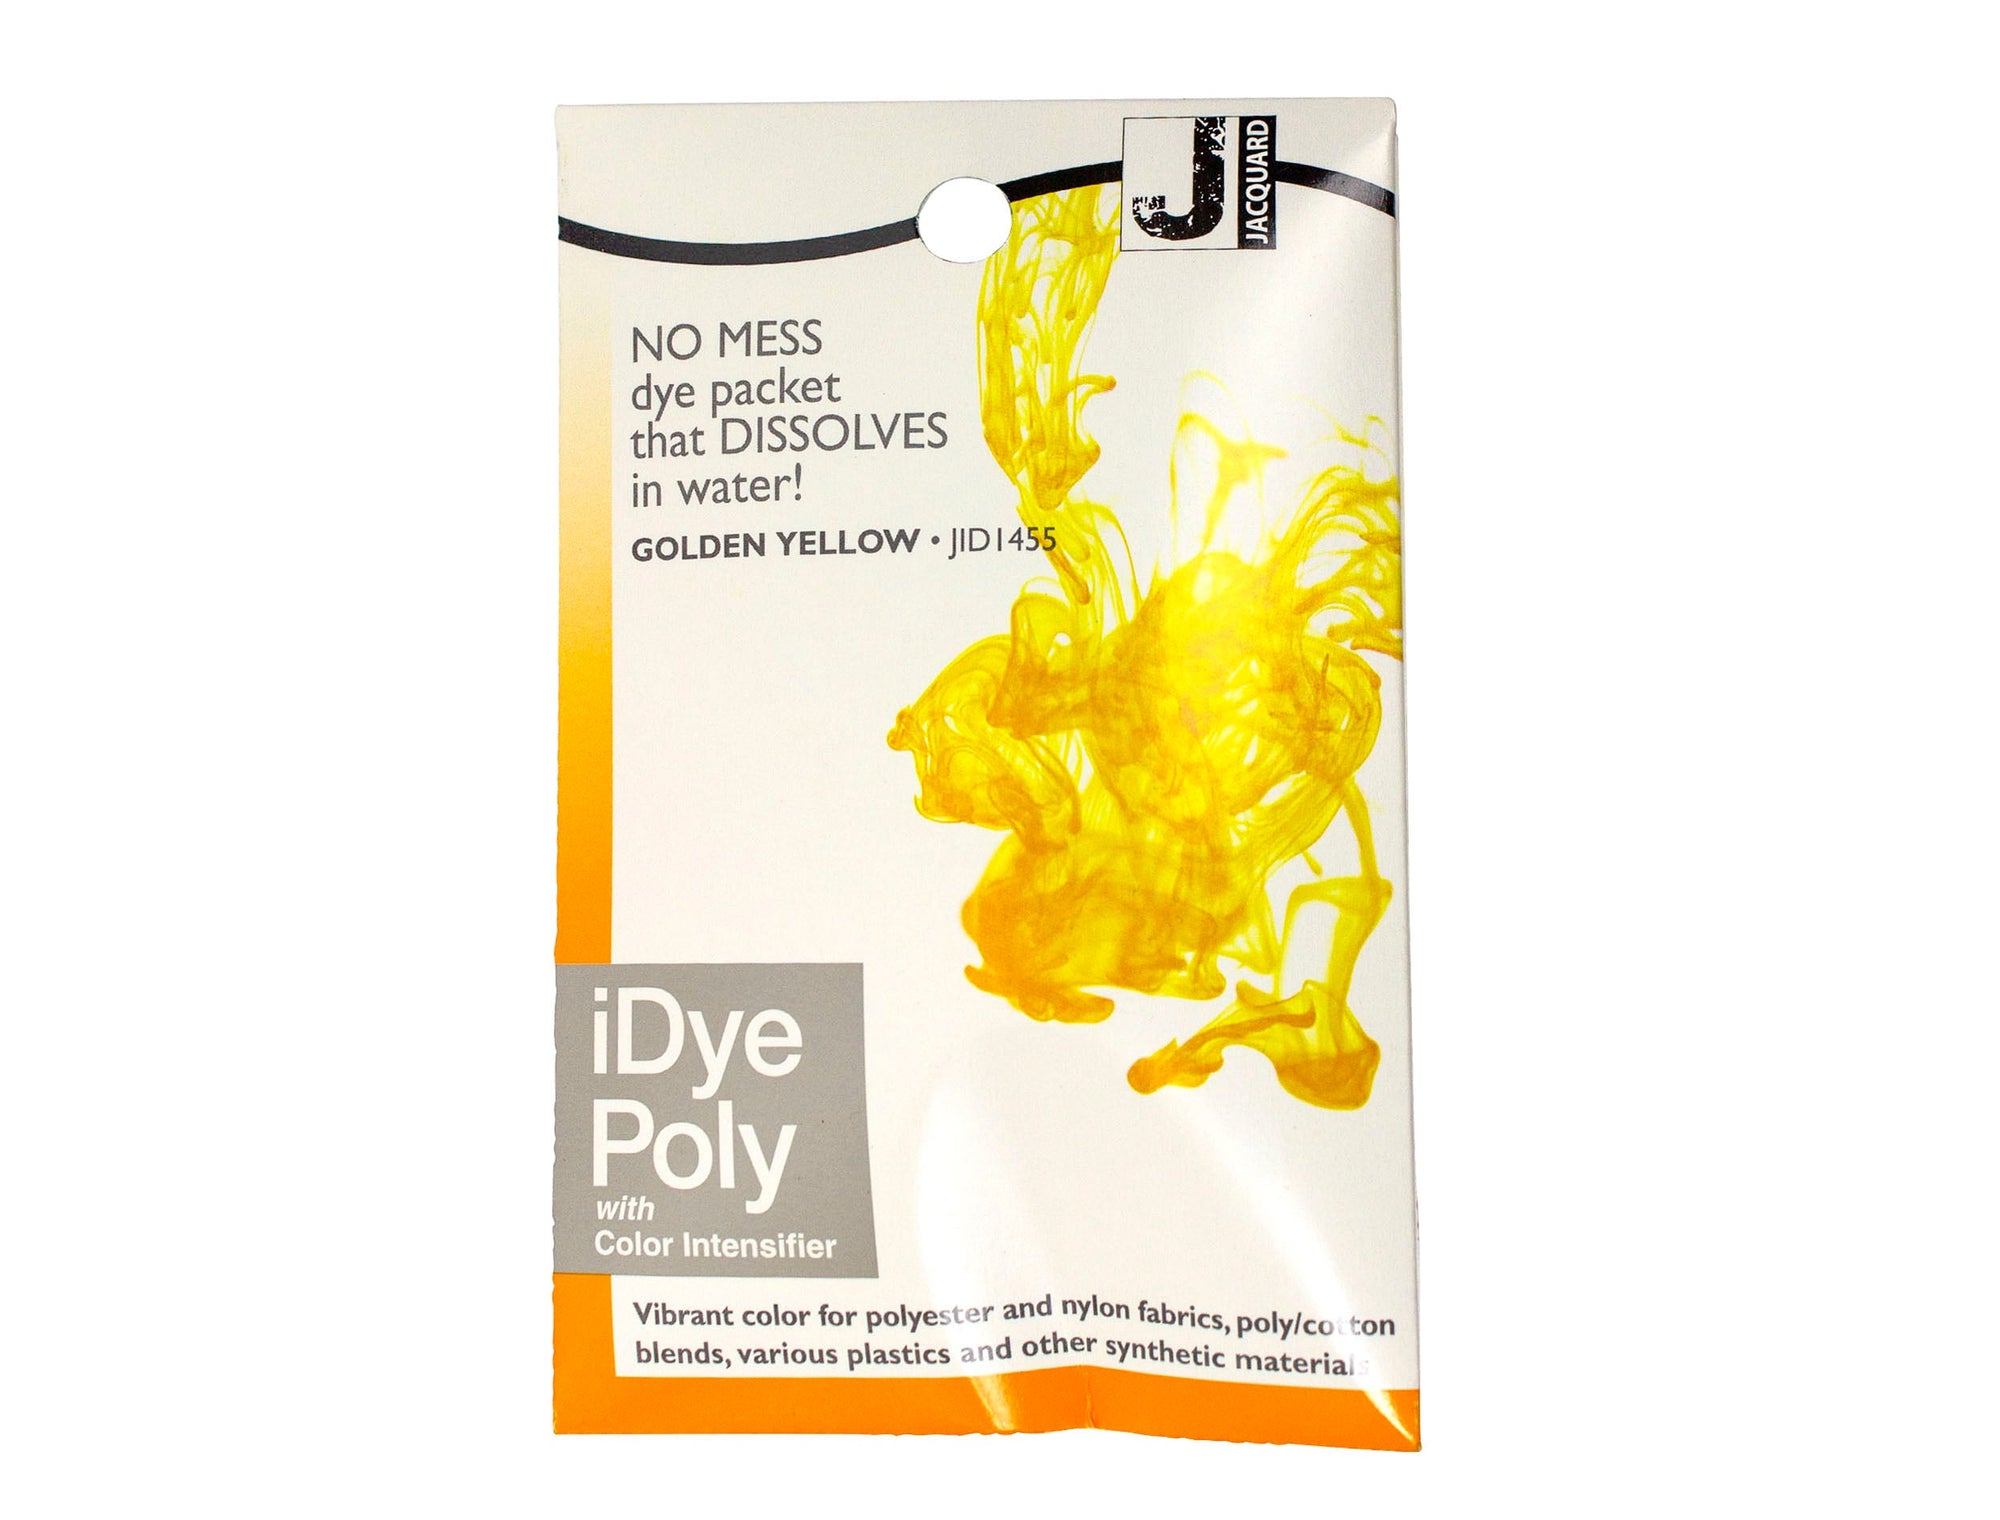 Jacquard iDye Poly Fabric Dye - Humboldt Haberdashery